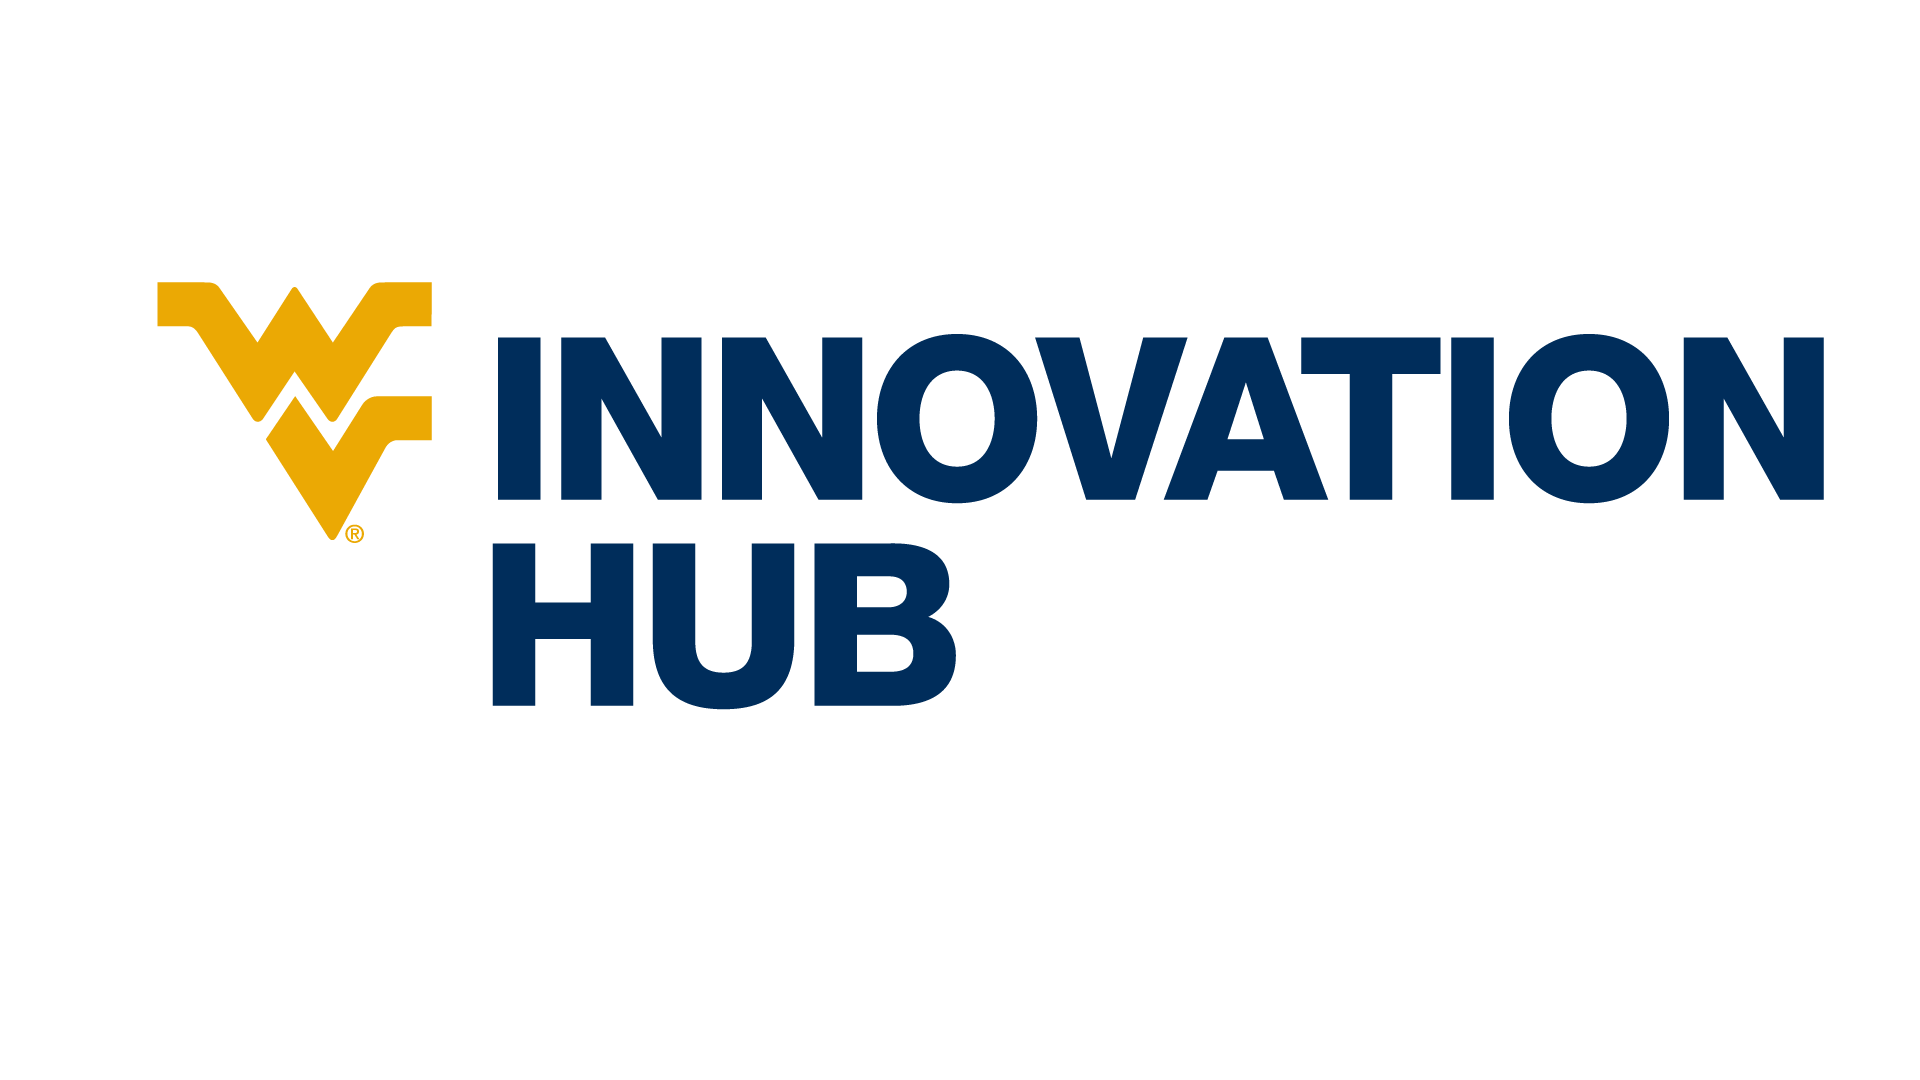 WVU Innovation Hub logo